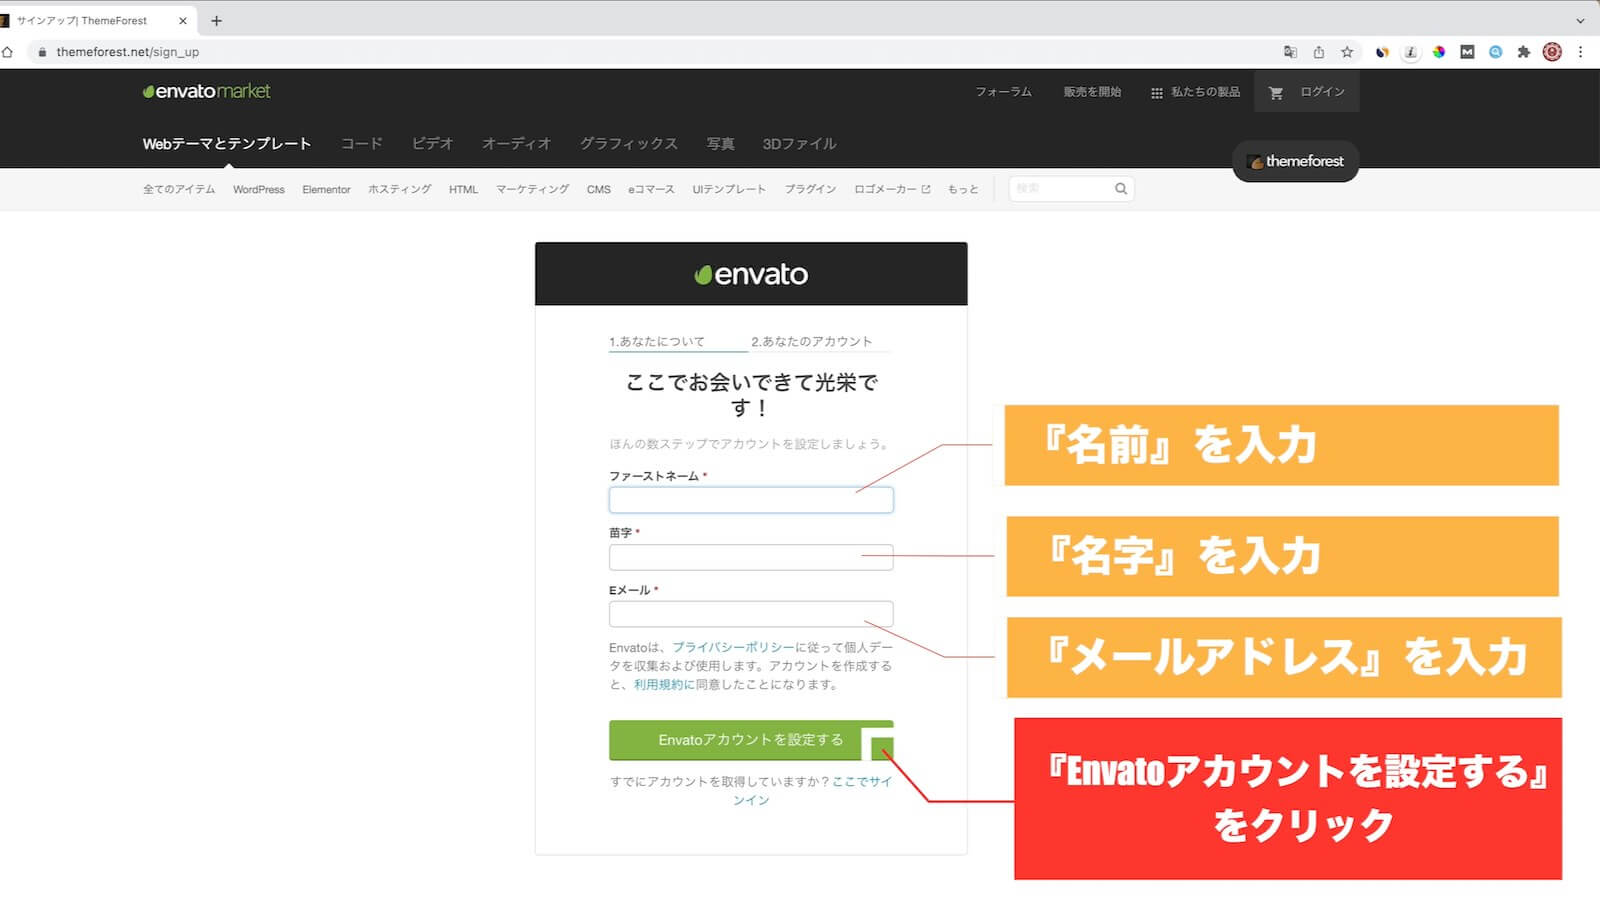 envato market account registration screen